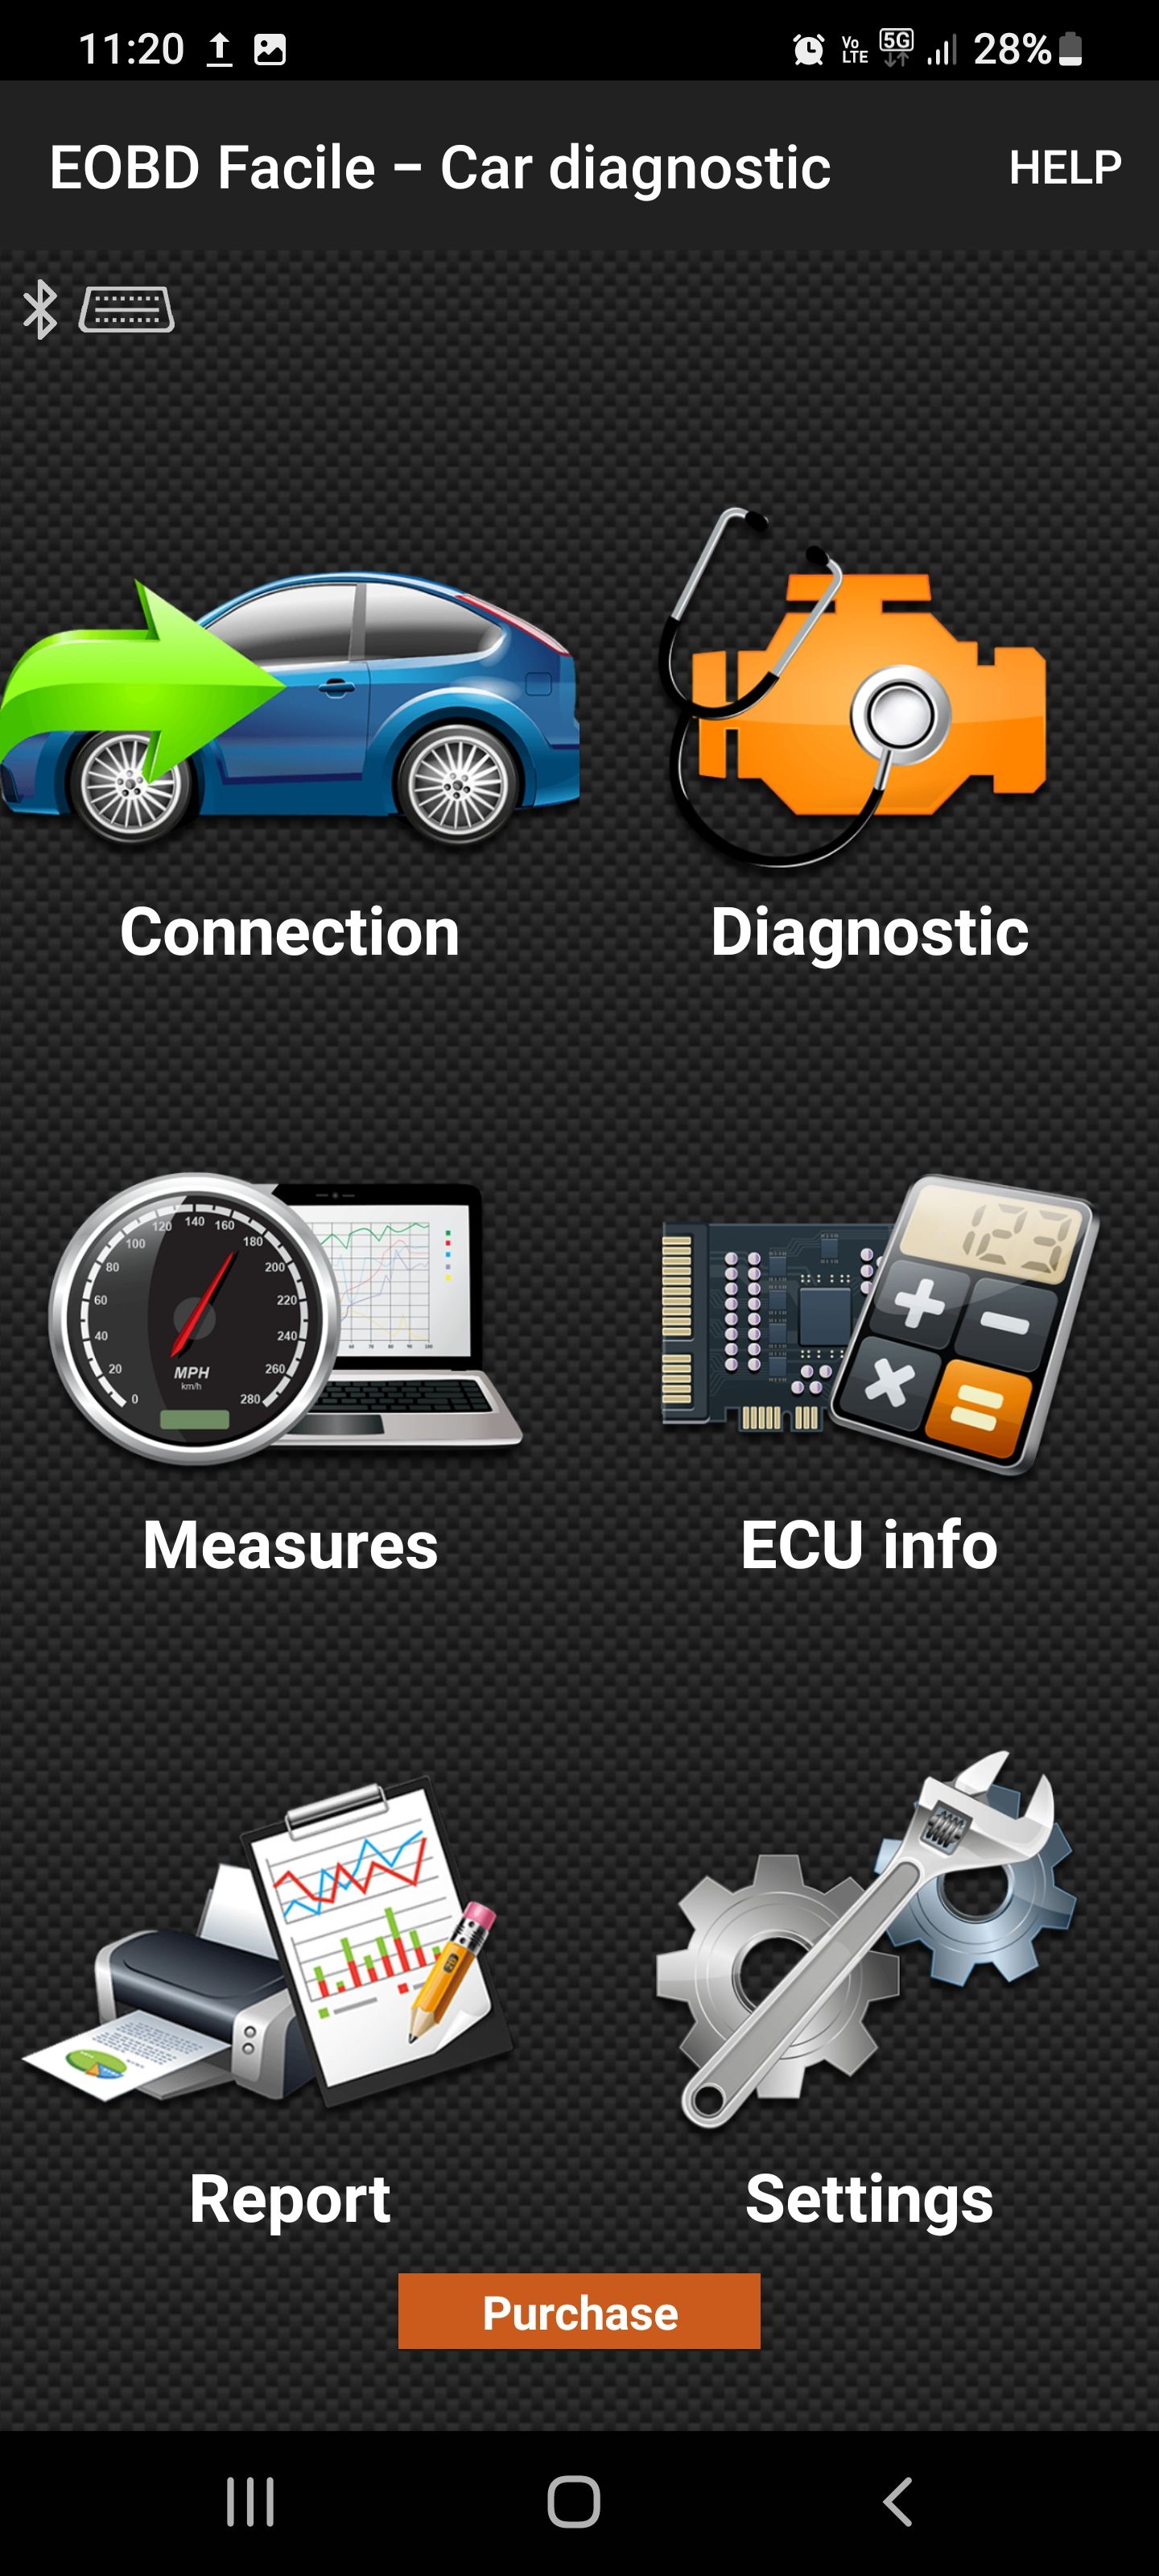 EOBD Facile app screenshot showing main menu